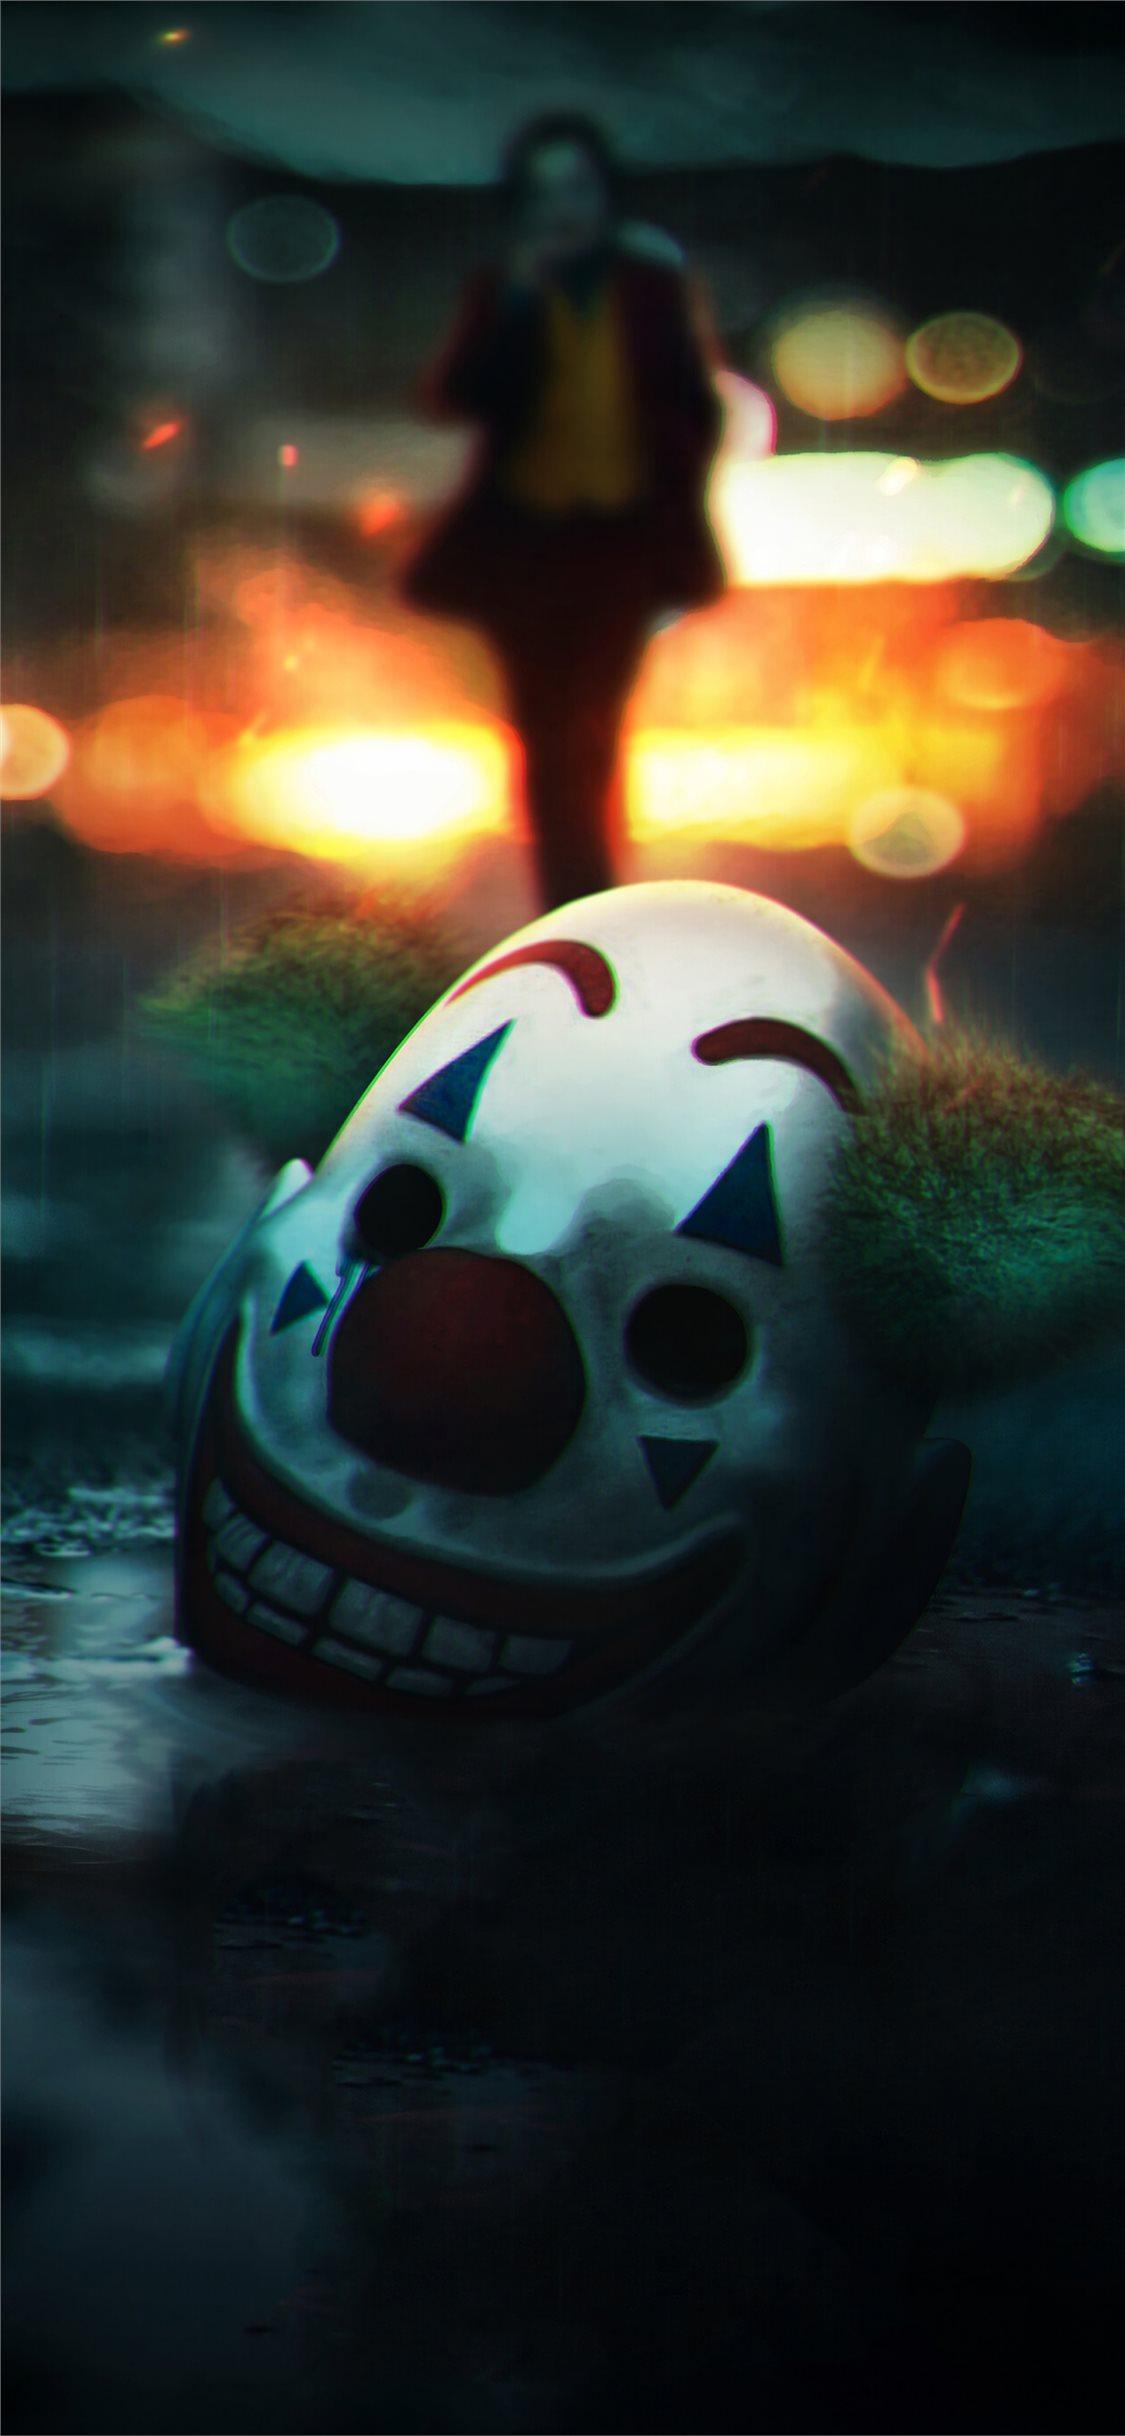 the joker mask off iPhone X Wallpaper Free Download